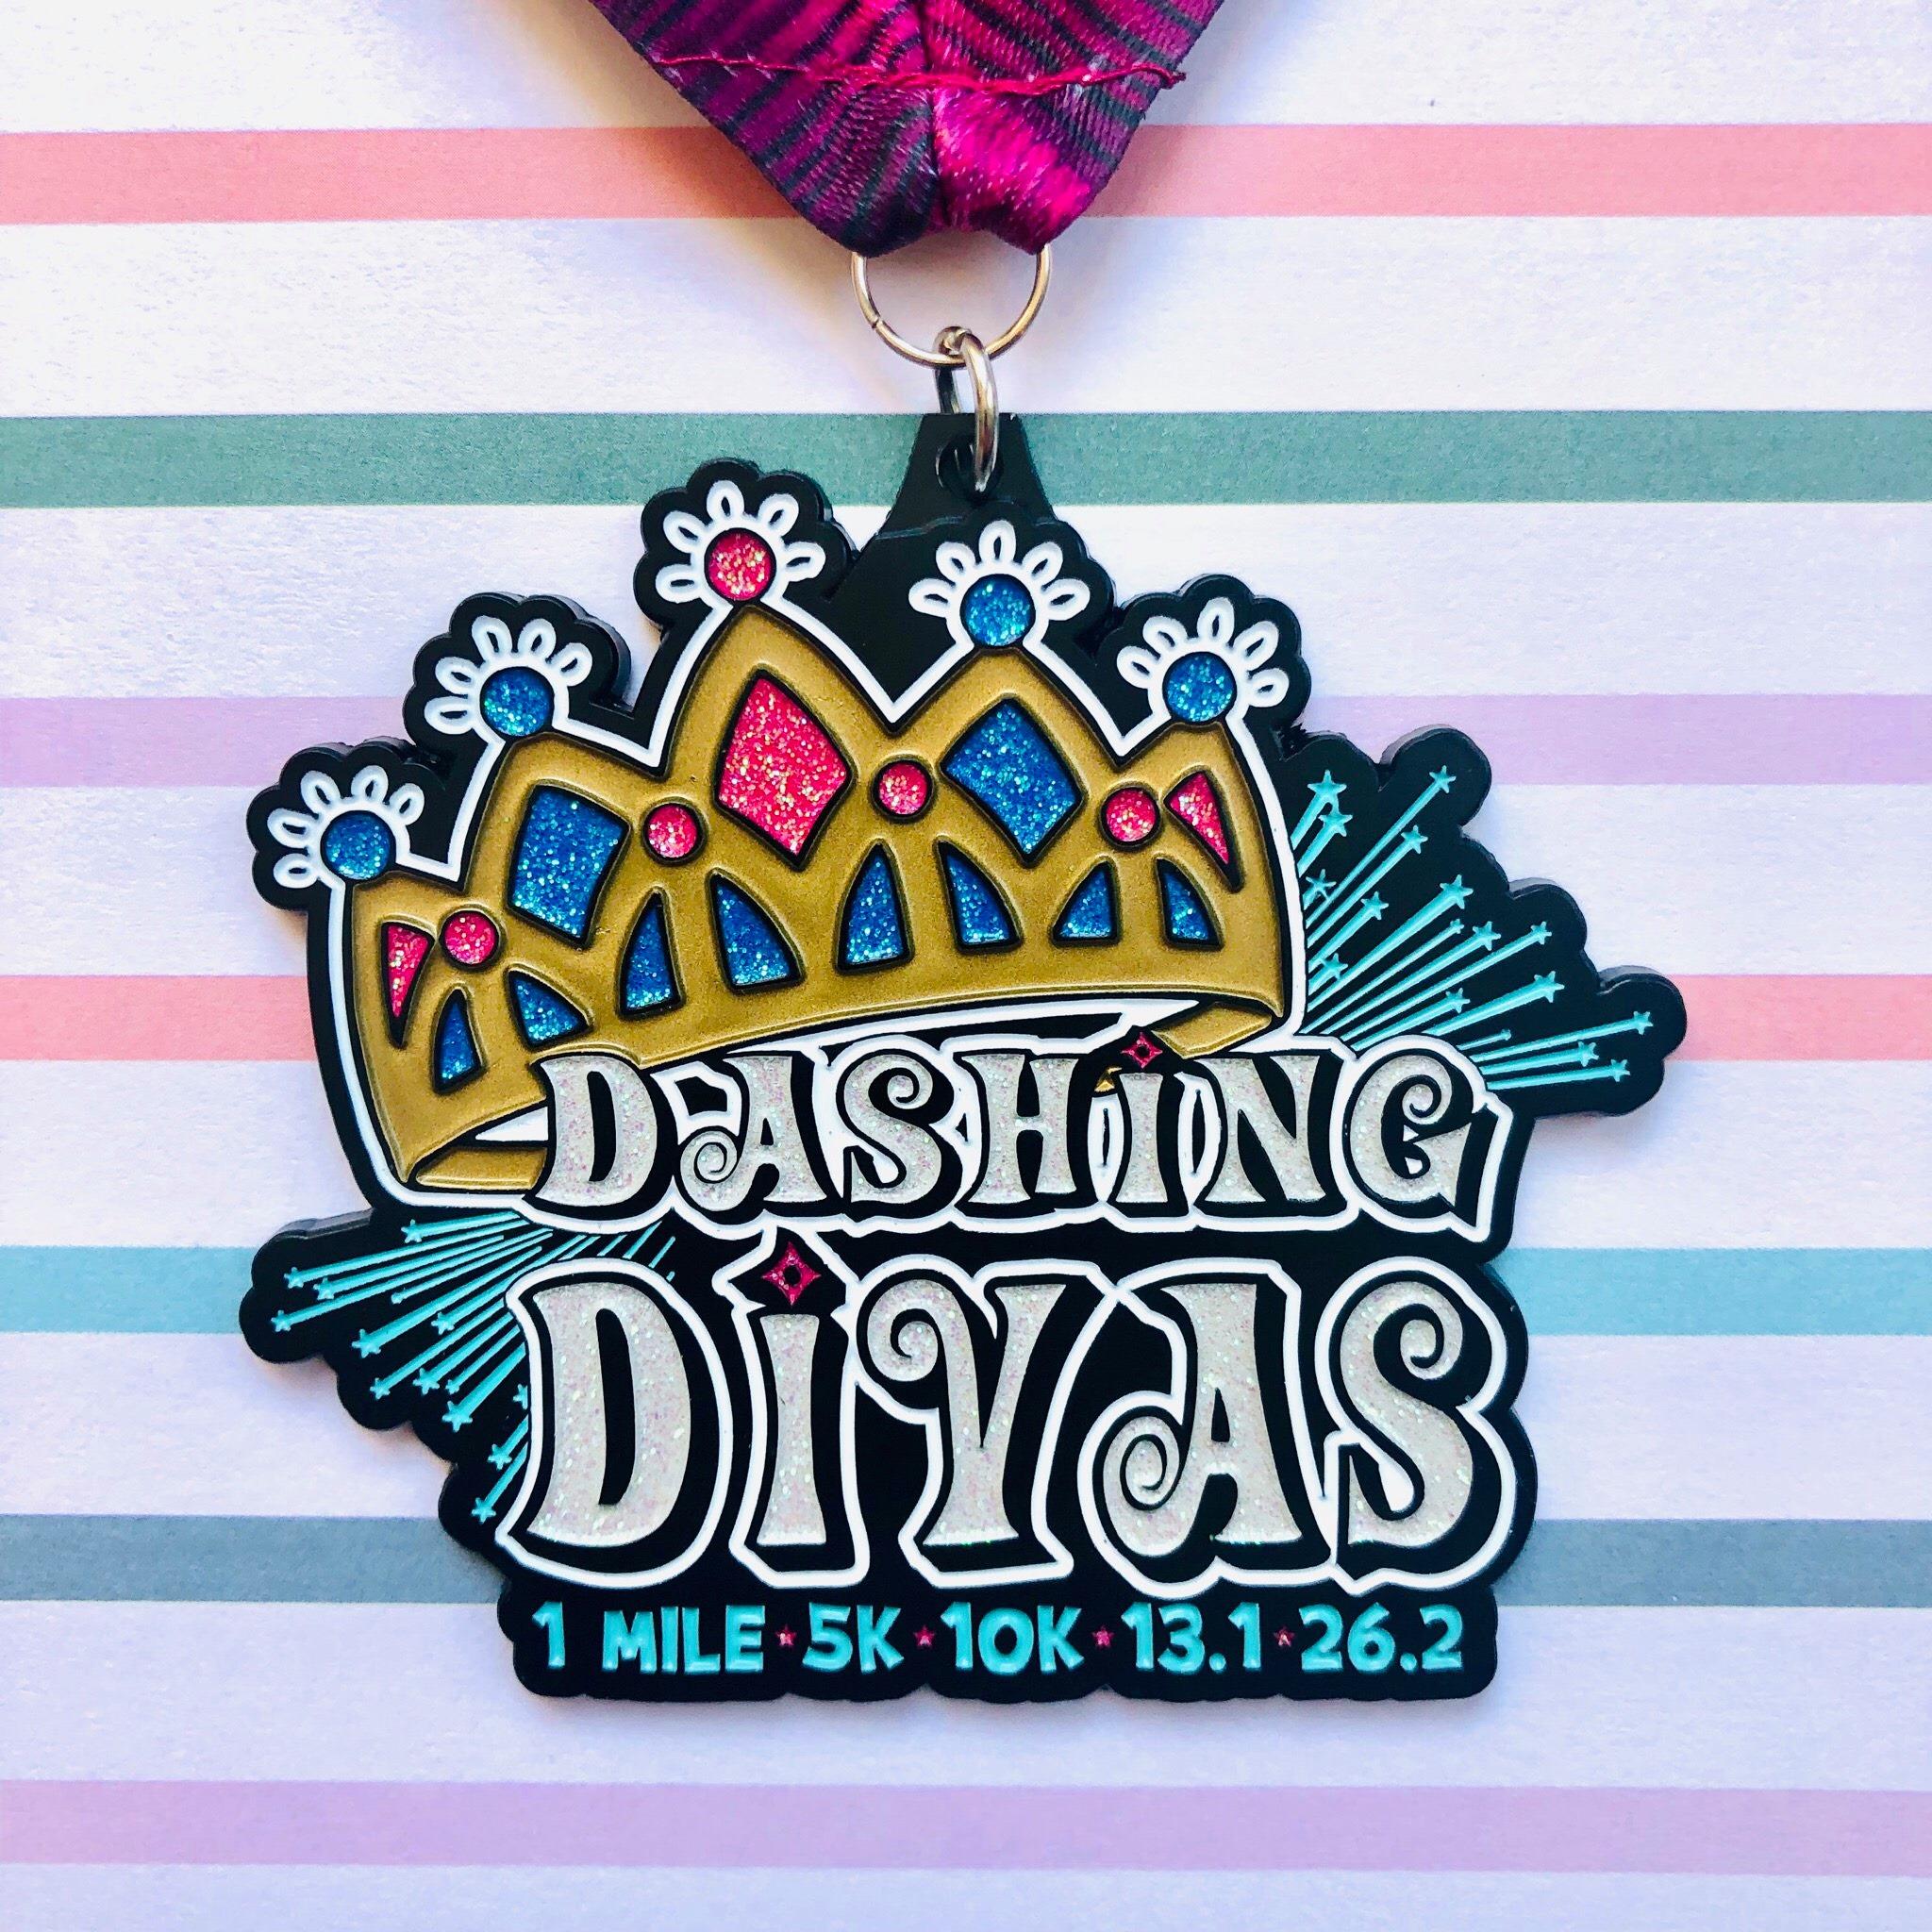 Only $8! Dashing Divas 1 Mile, 5K, 10K, 13.1, 26.2 - Annapolis